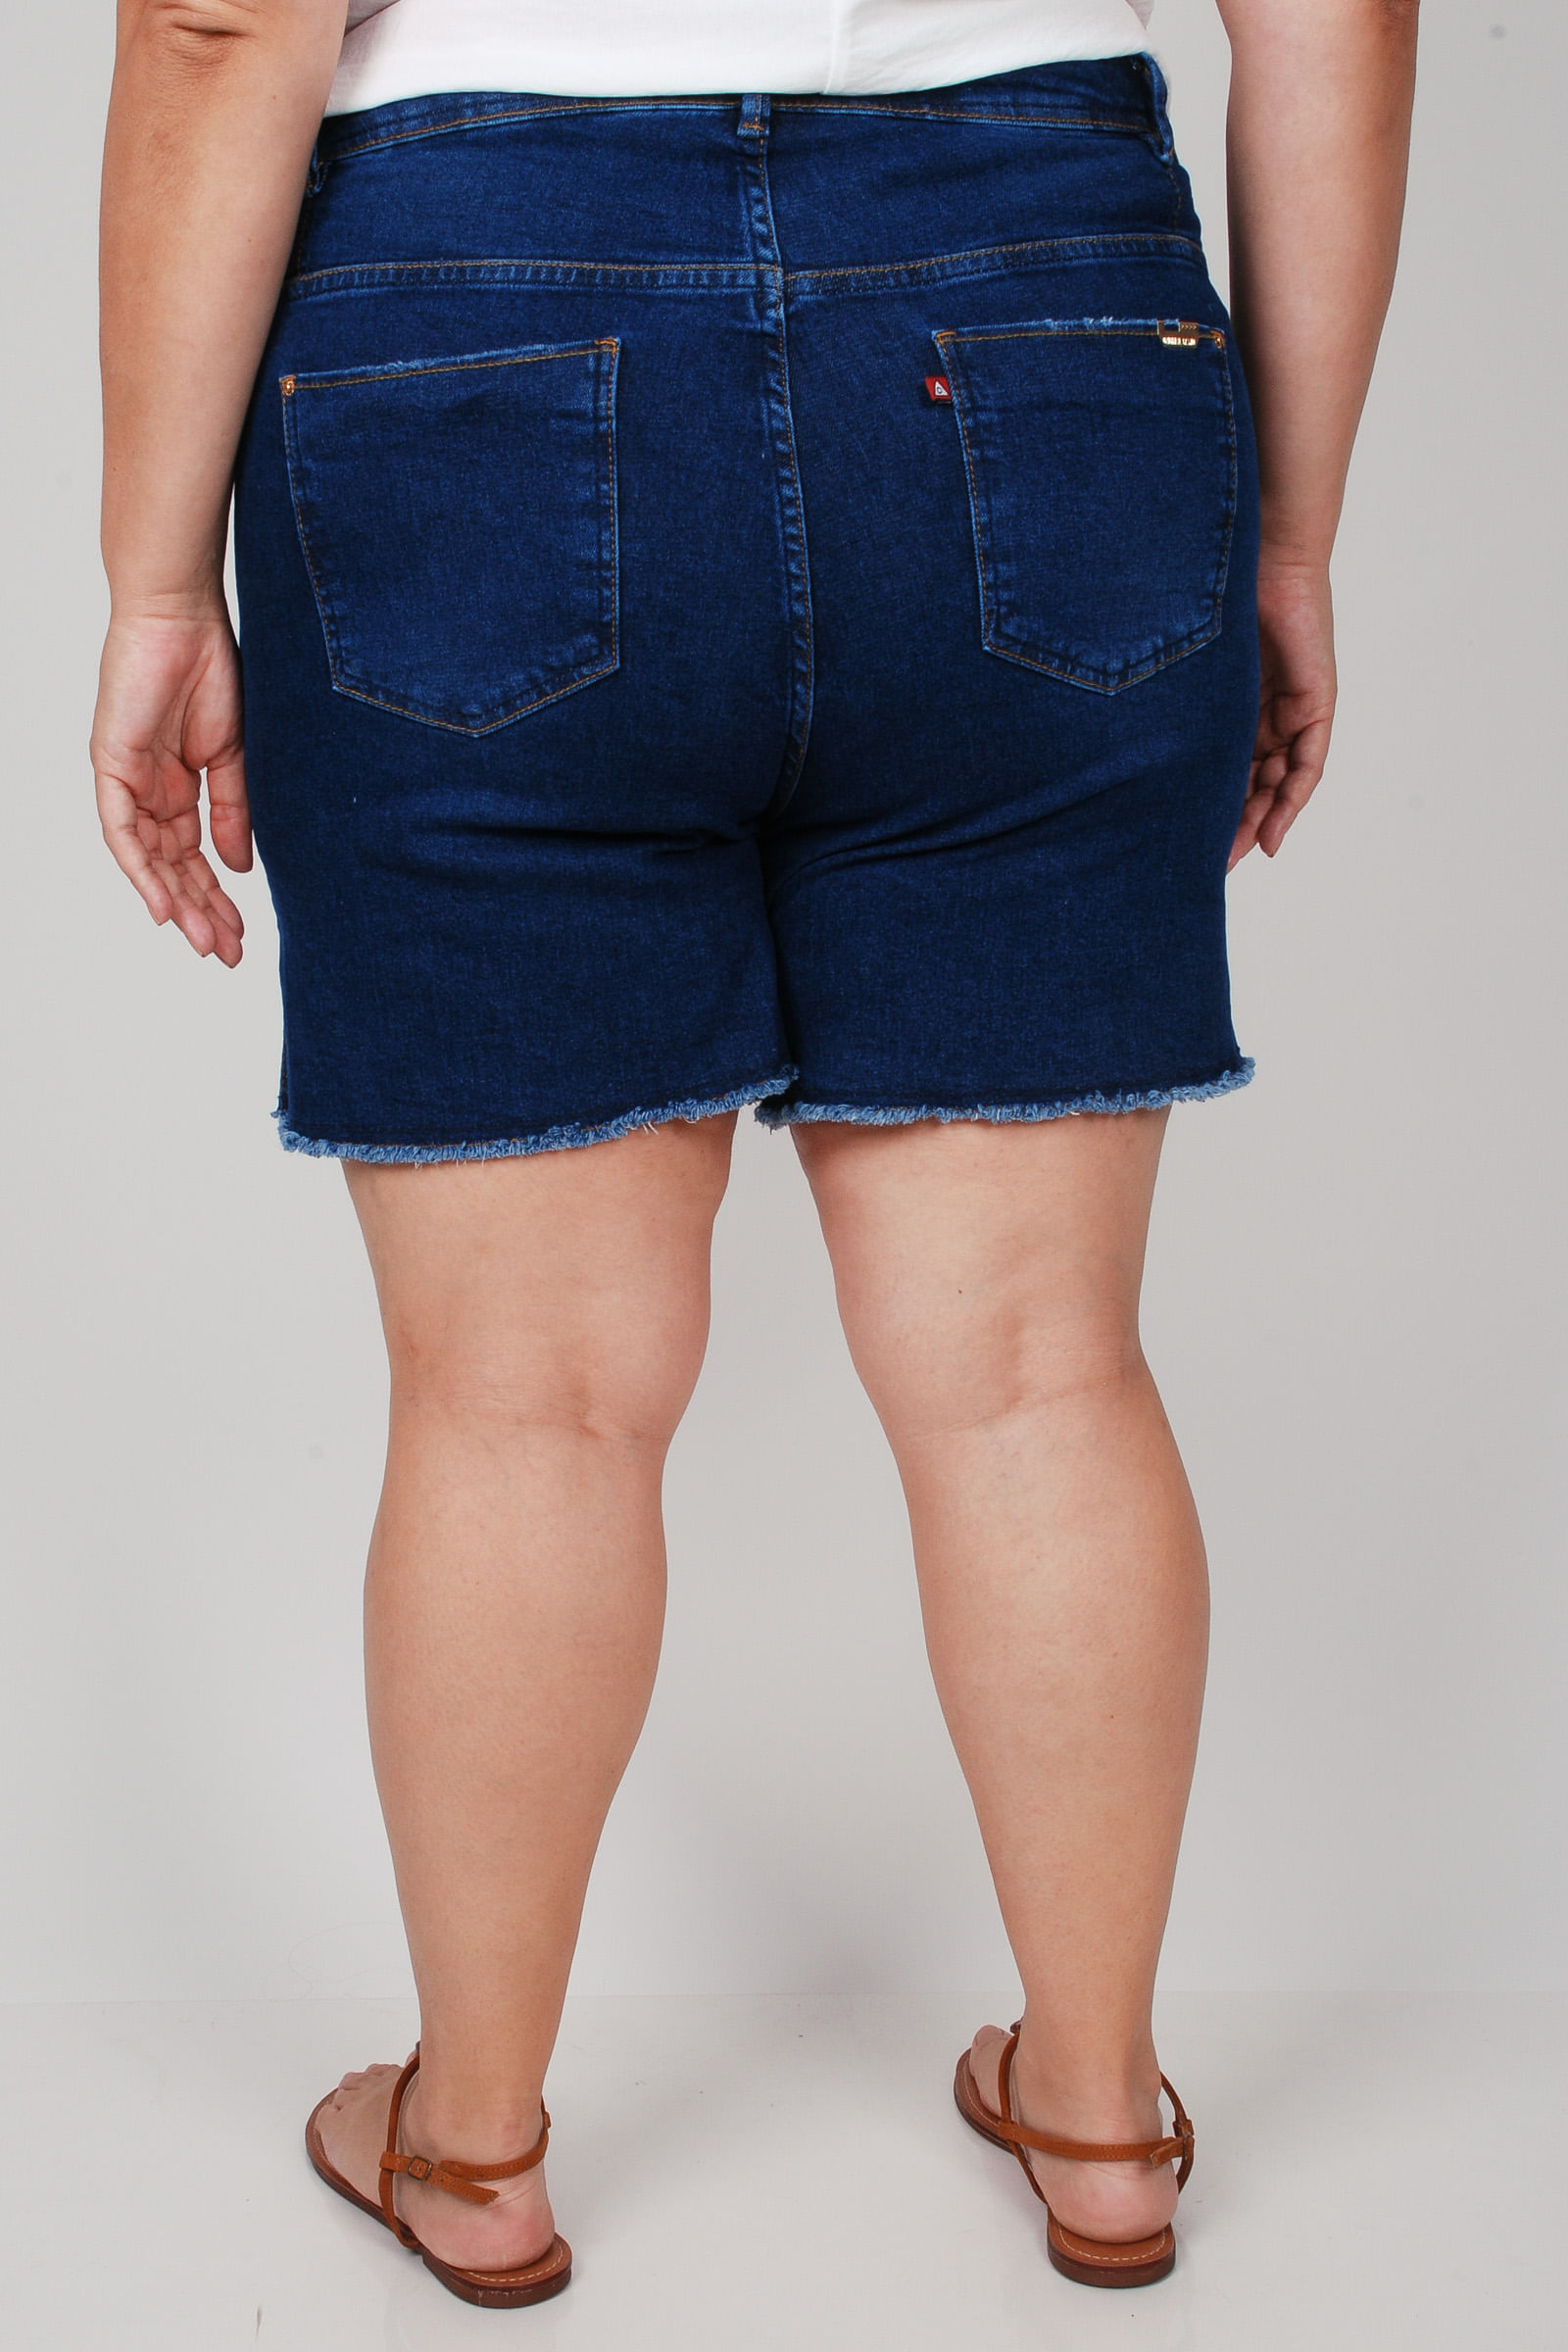 Shorts-jeans-com-barra-desfiada-plus-size_0102_4